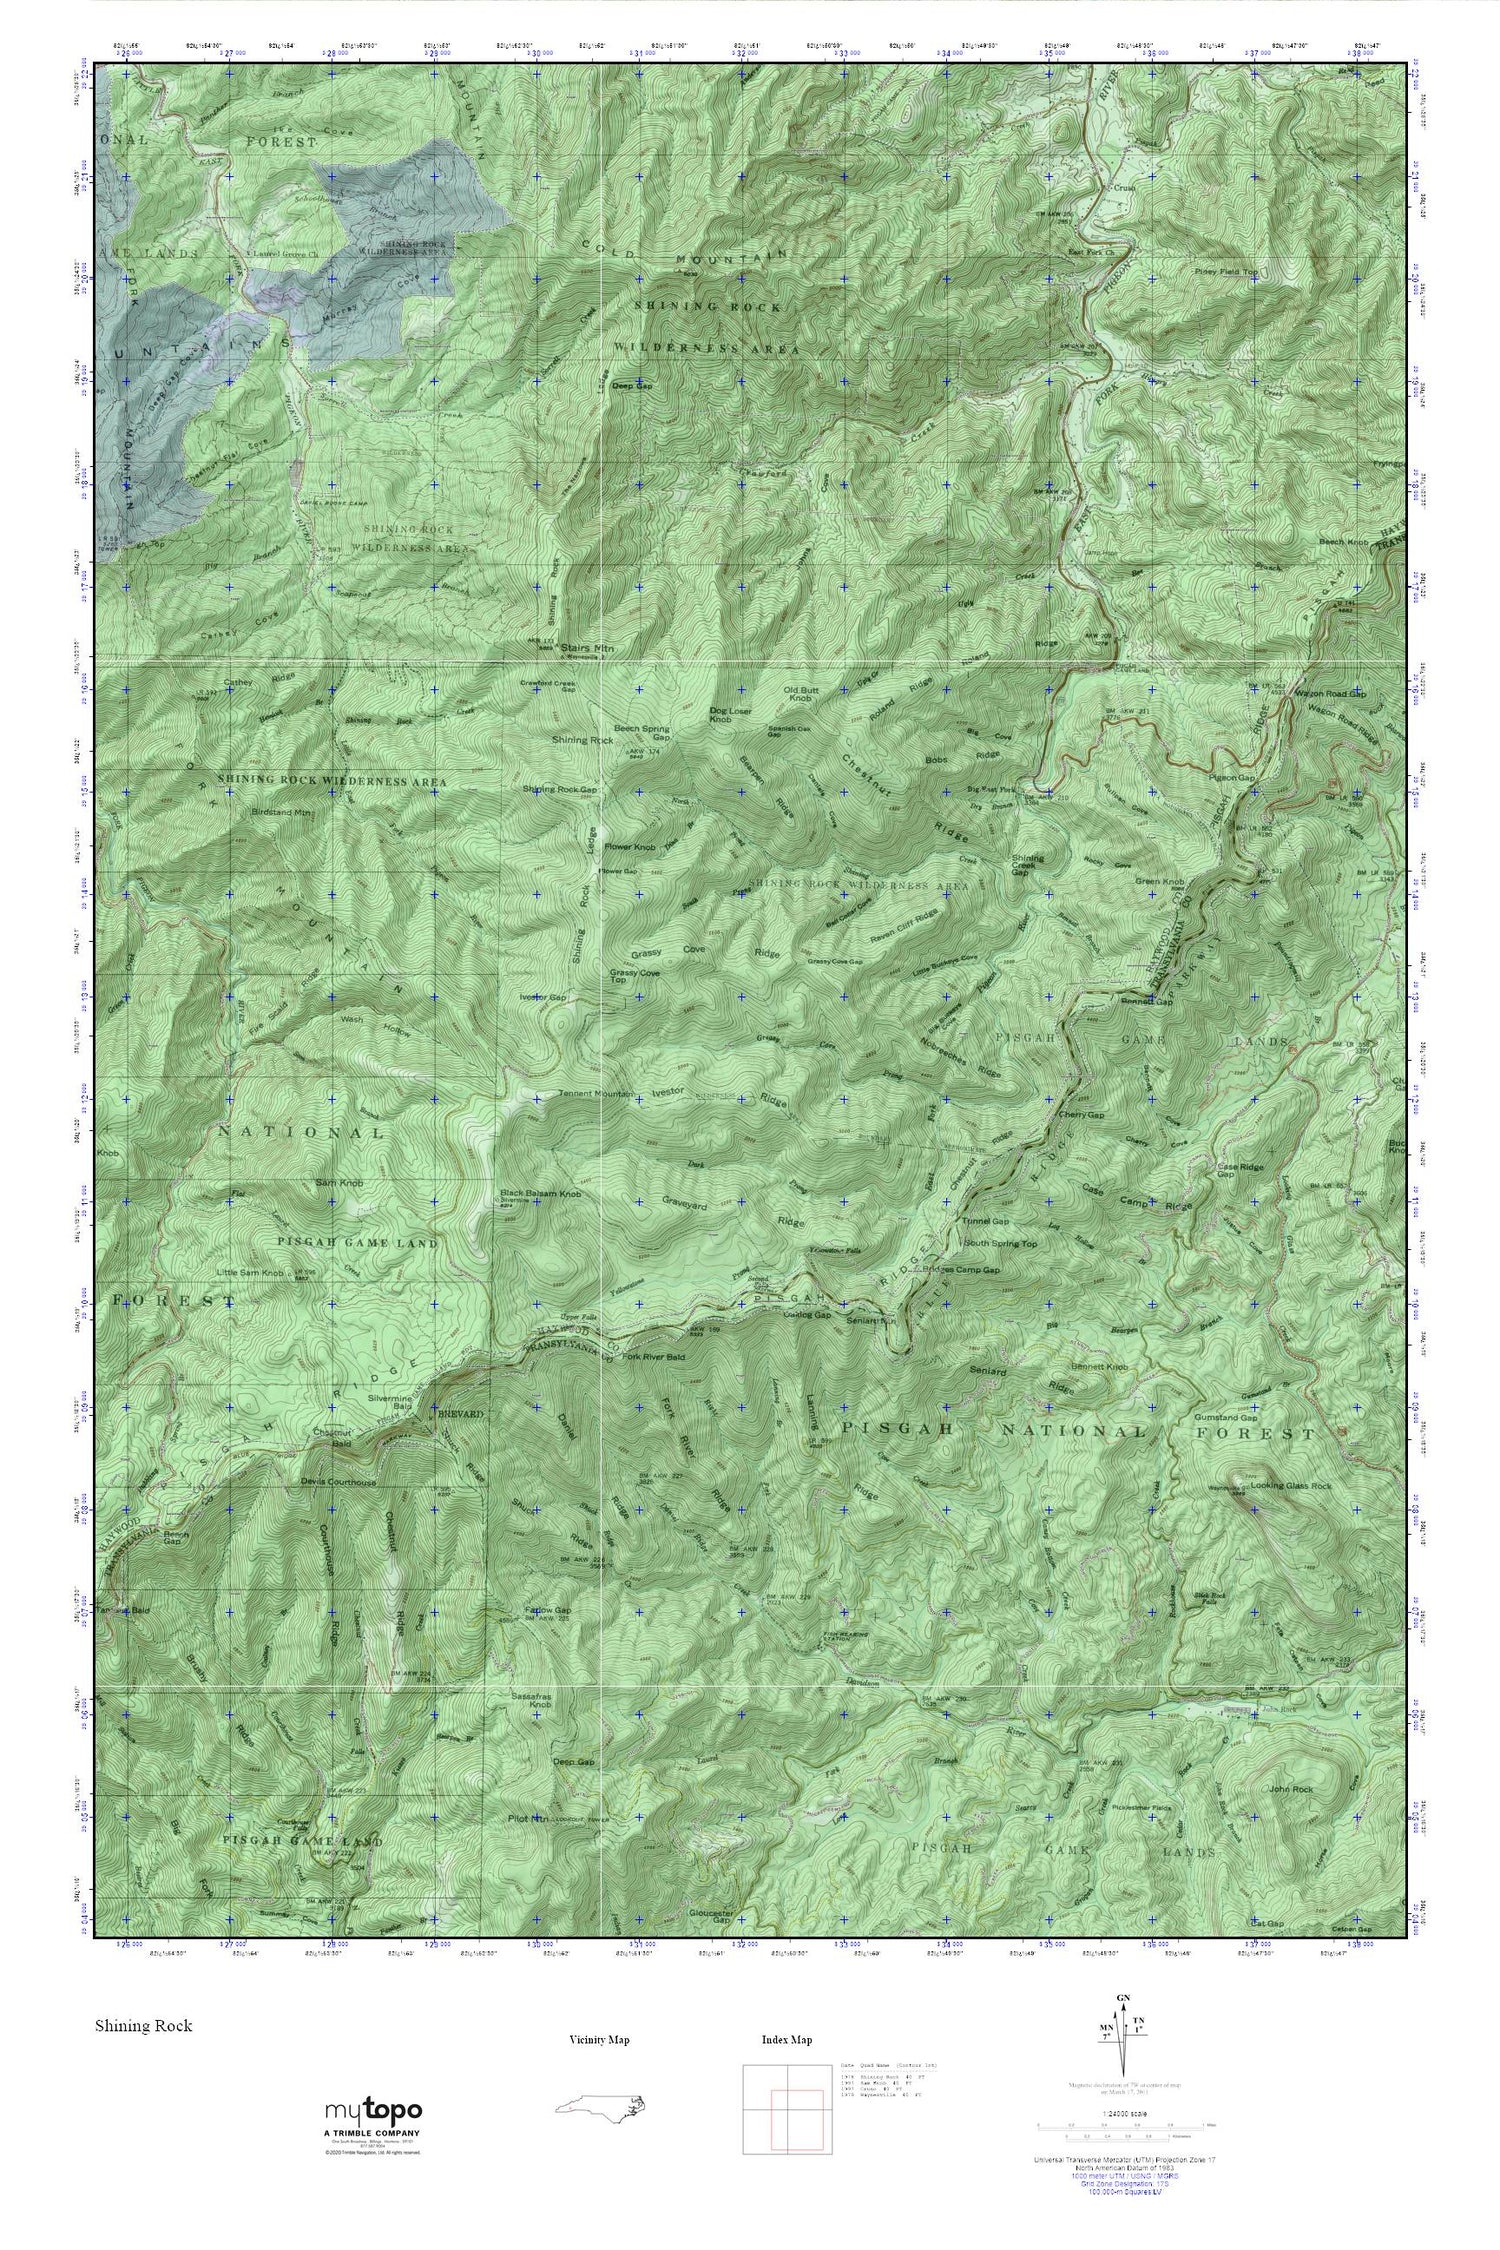 Shining Rock MyTopo Explorer Series Map Image